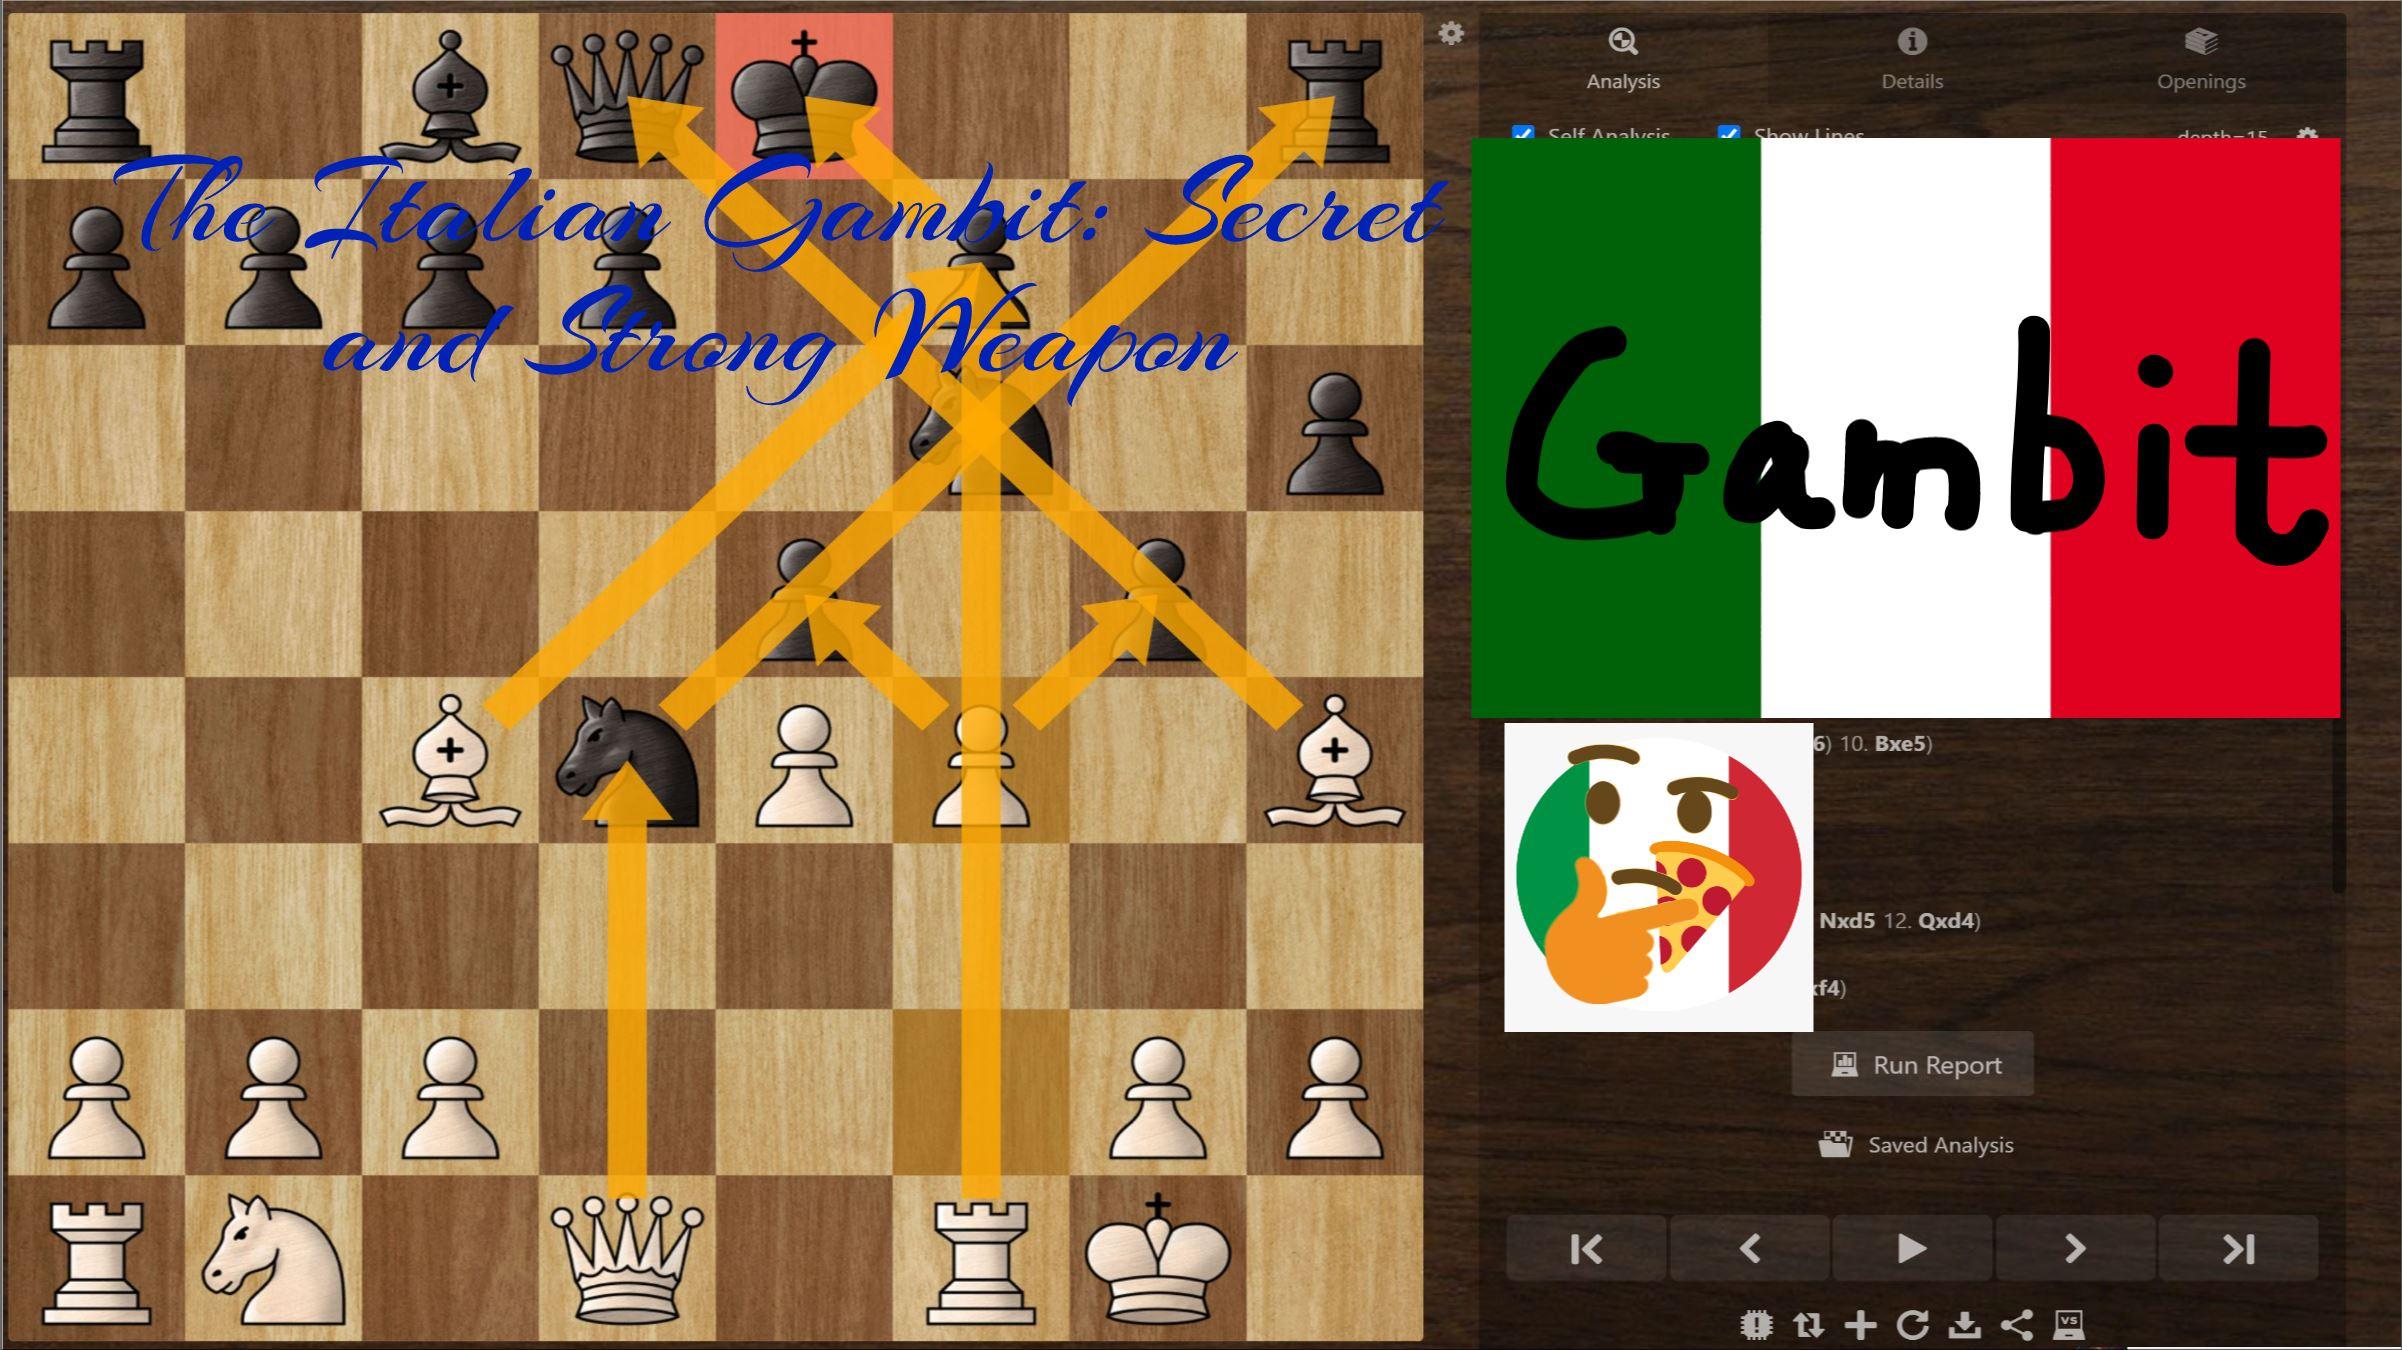 The Italian Game Chess Opening